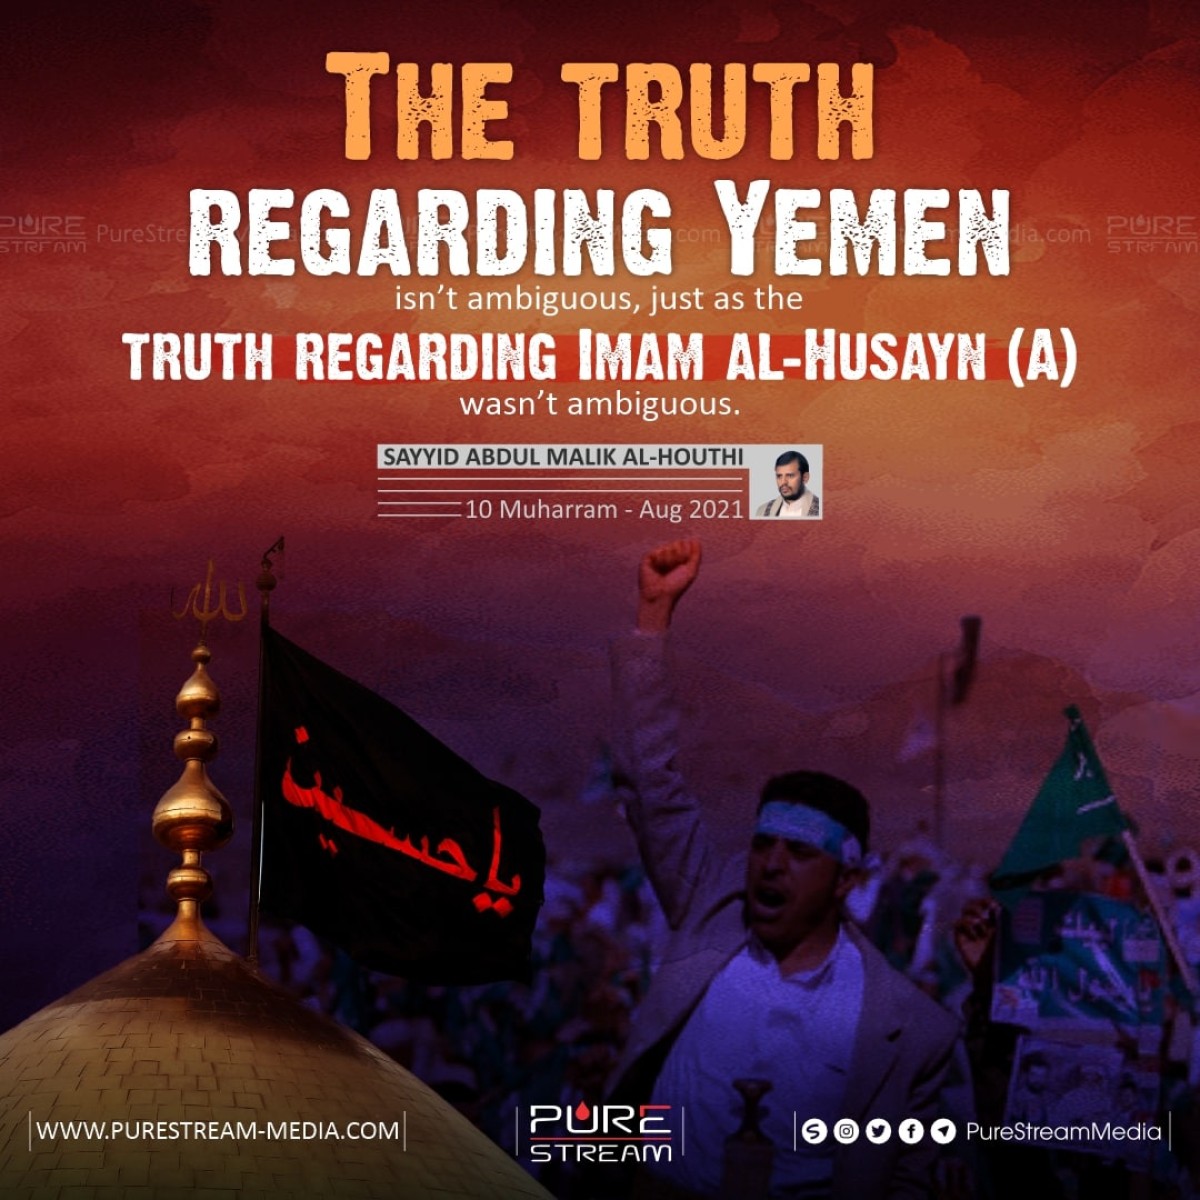 "The truth regarding Yemen isn’t ambiguous, just as the truth regarding Imam al-Husayn (A) wasn’t ambiguous